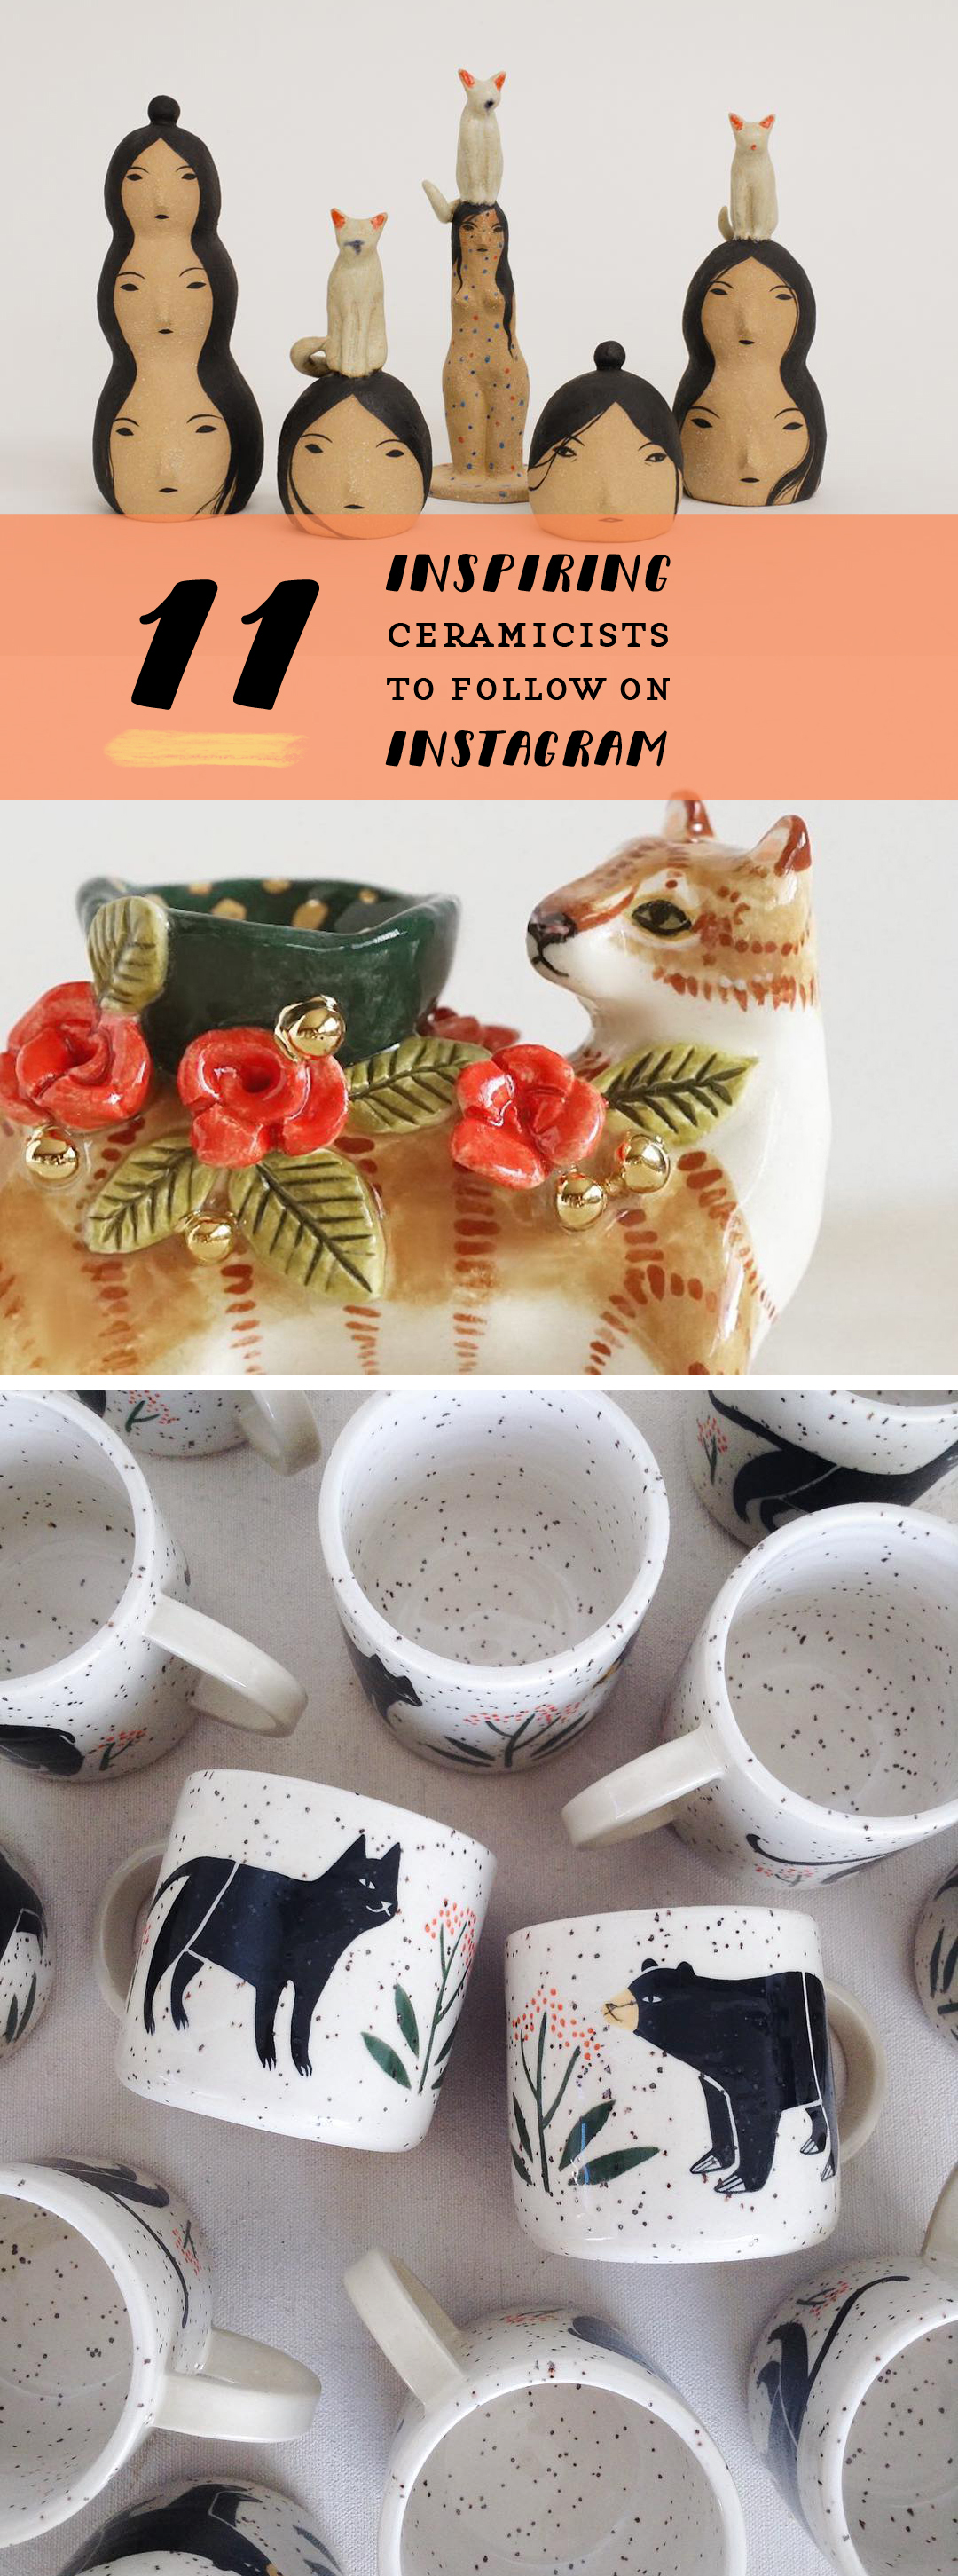 Best ceramic artists on Instagram